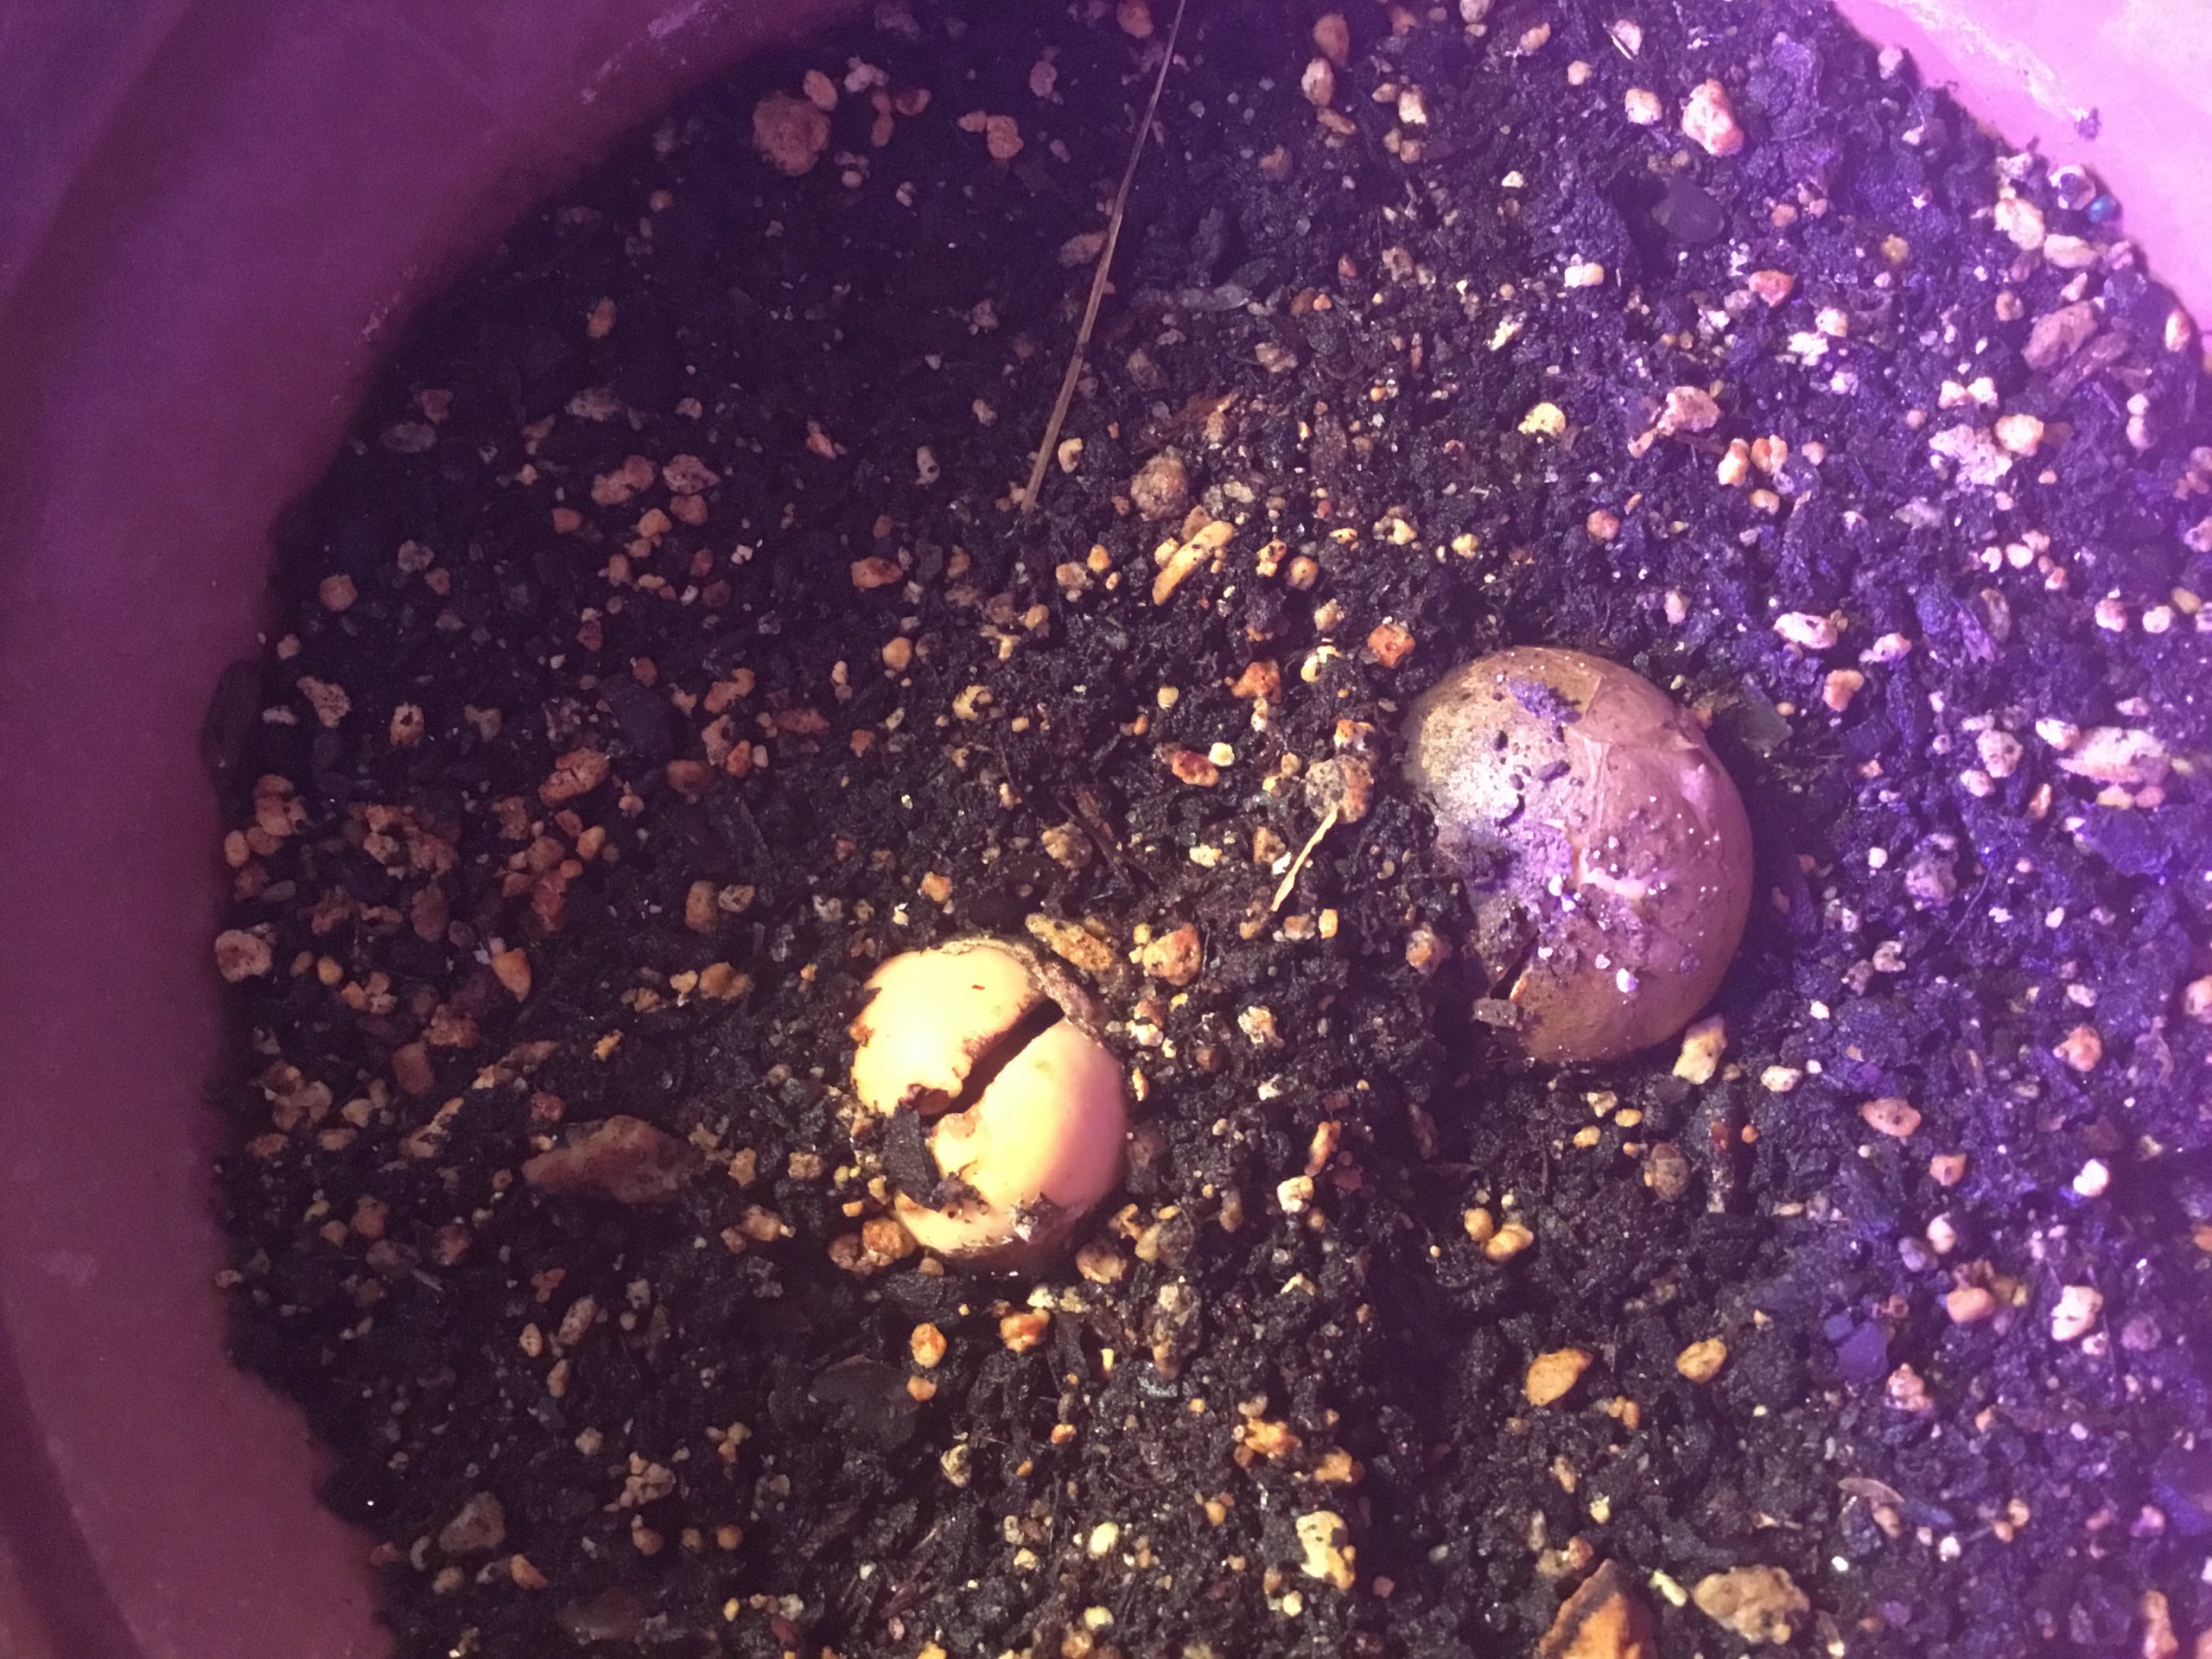 Two avocado seeds planted April 2019